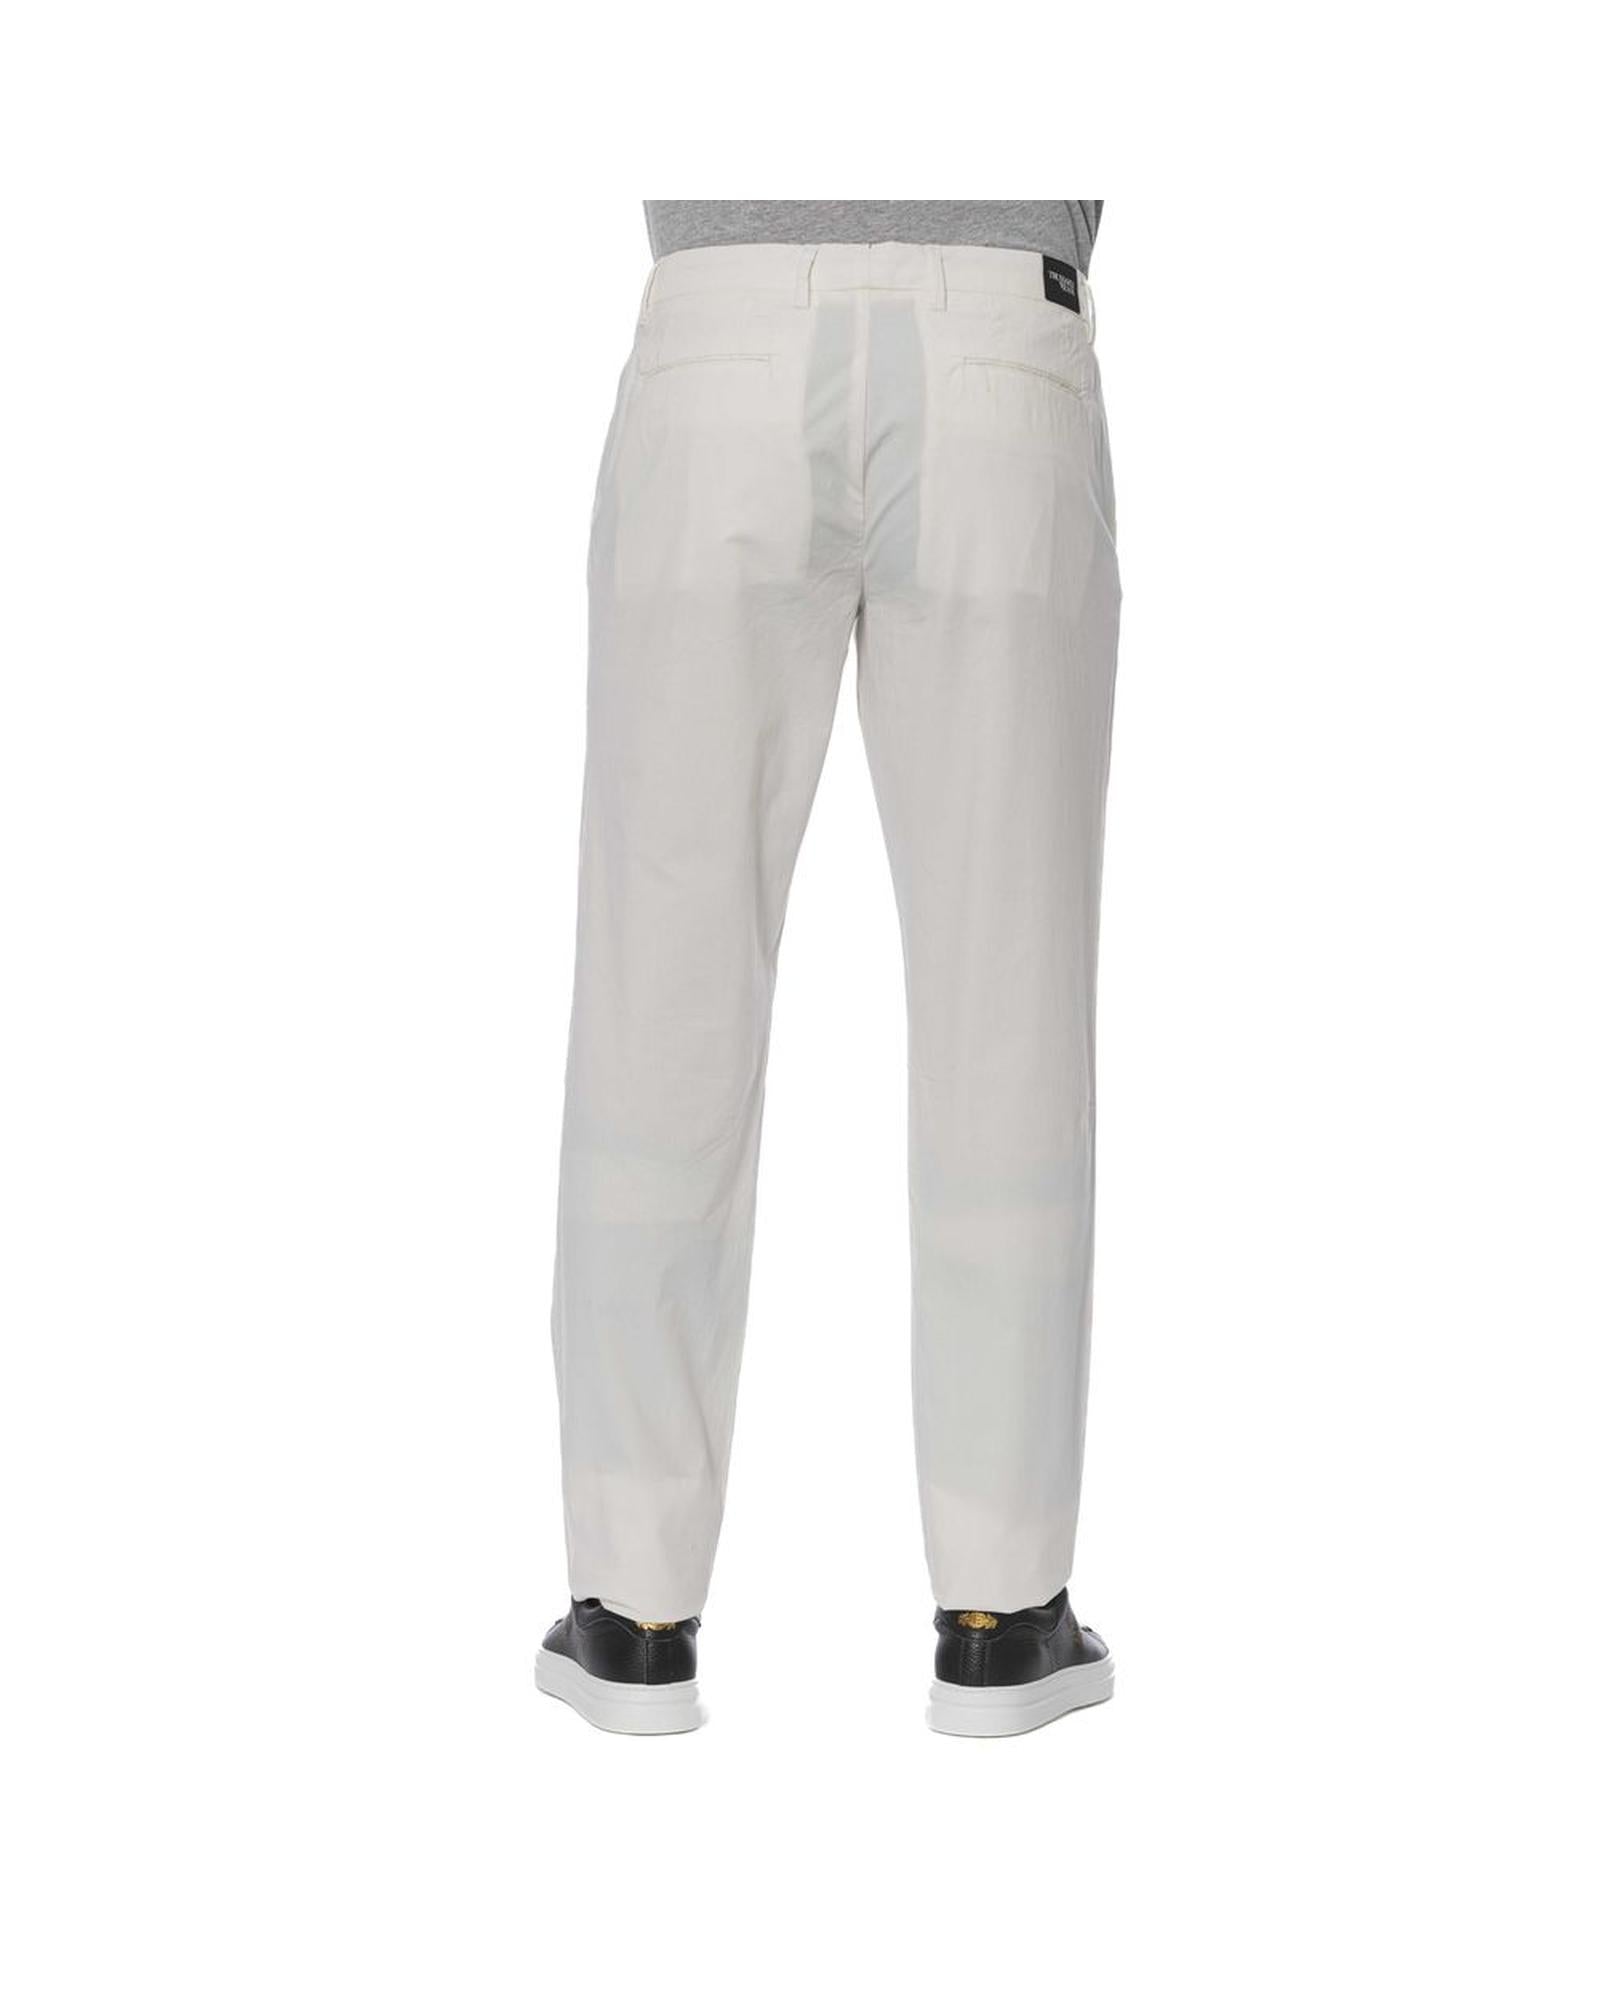 Men's White Cotton Jeans & Pant - W54 US